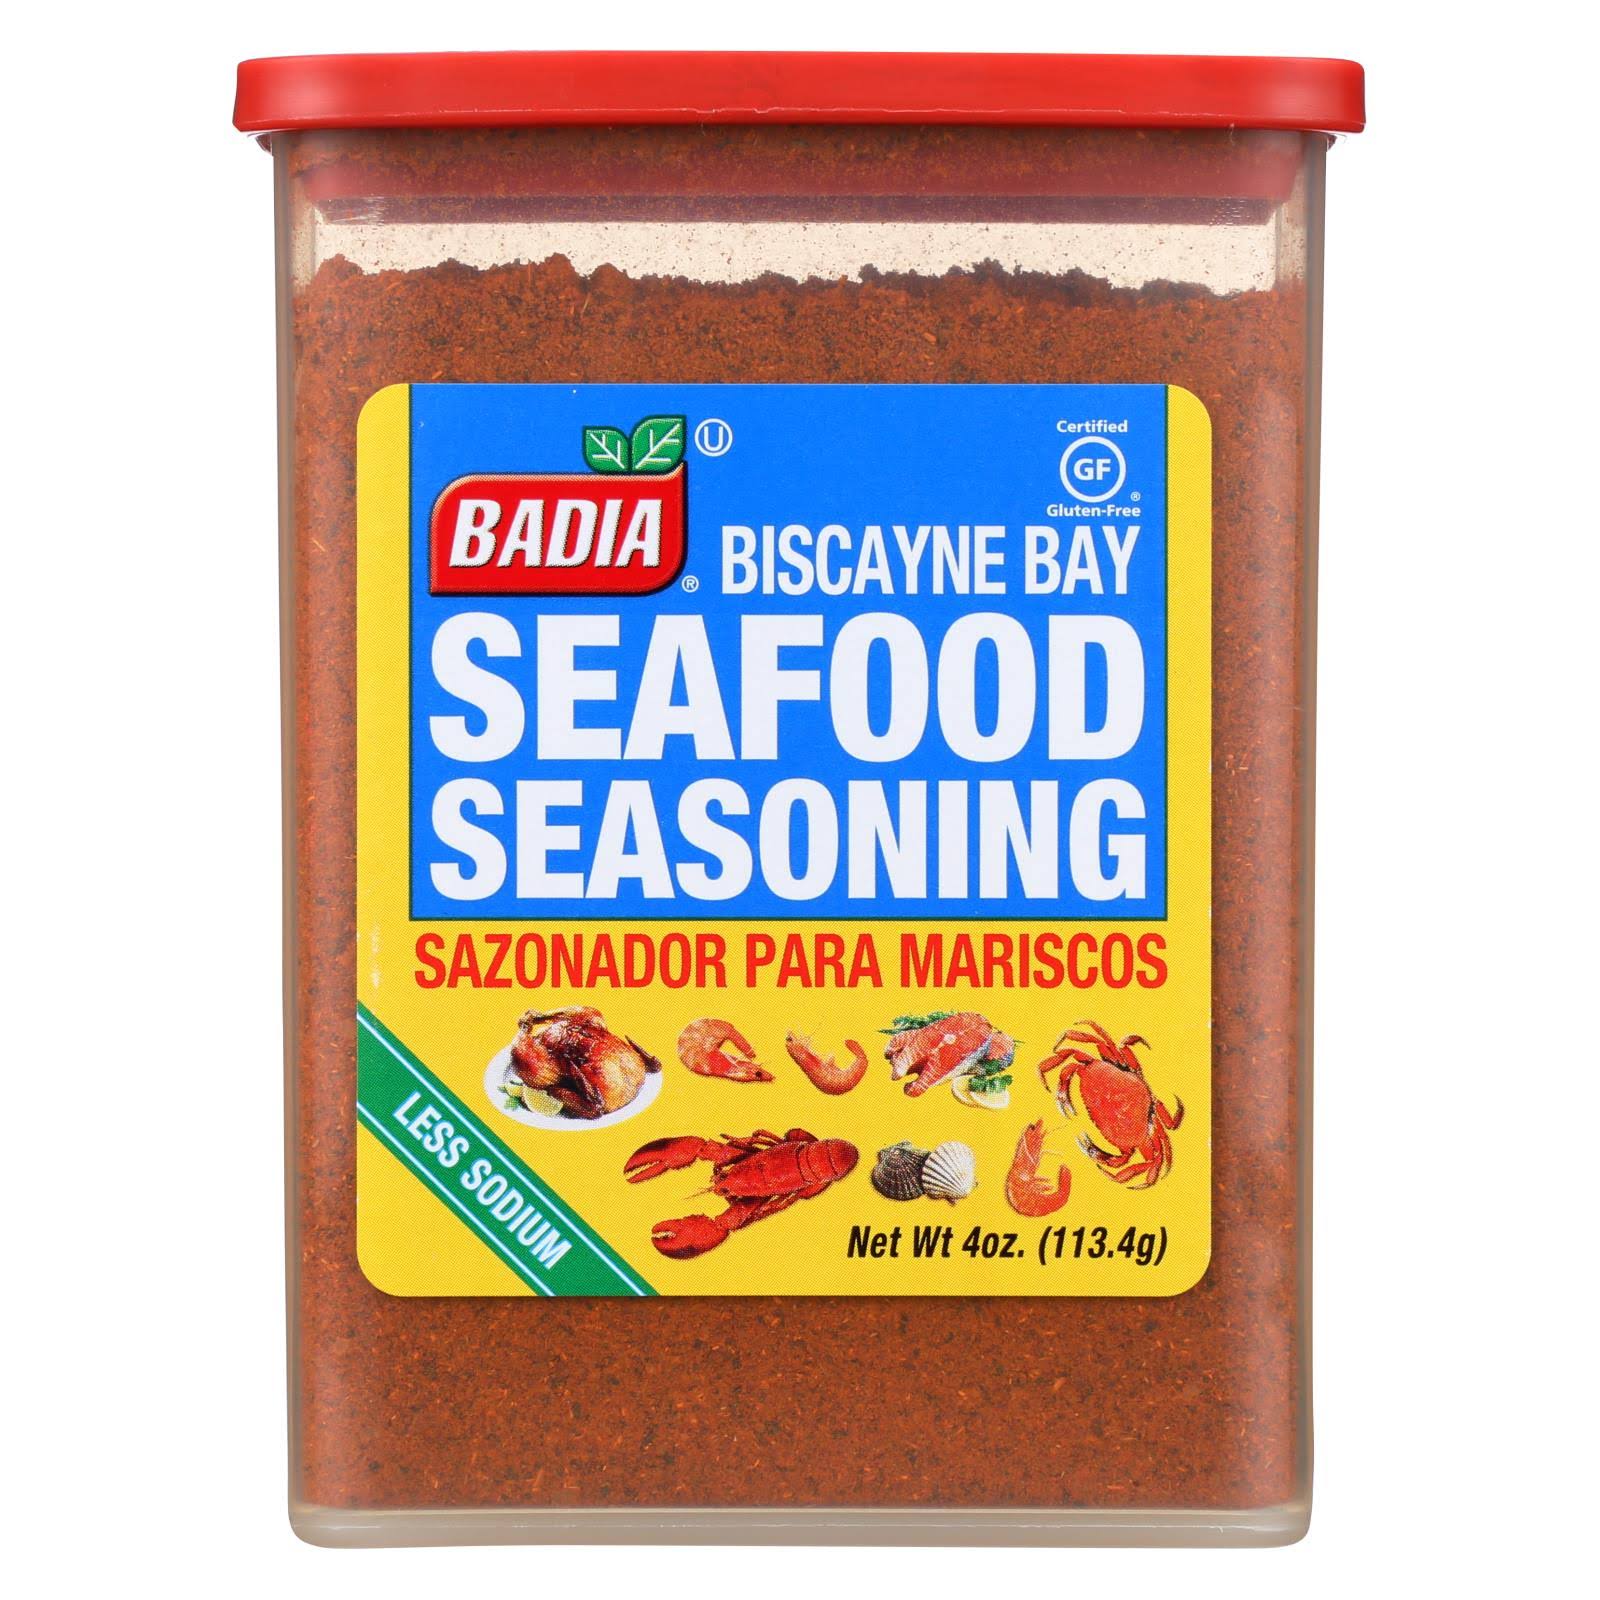 Badia Biscayne Bay Seasoning, Seafood - 4 oz